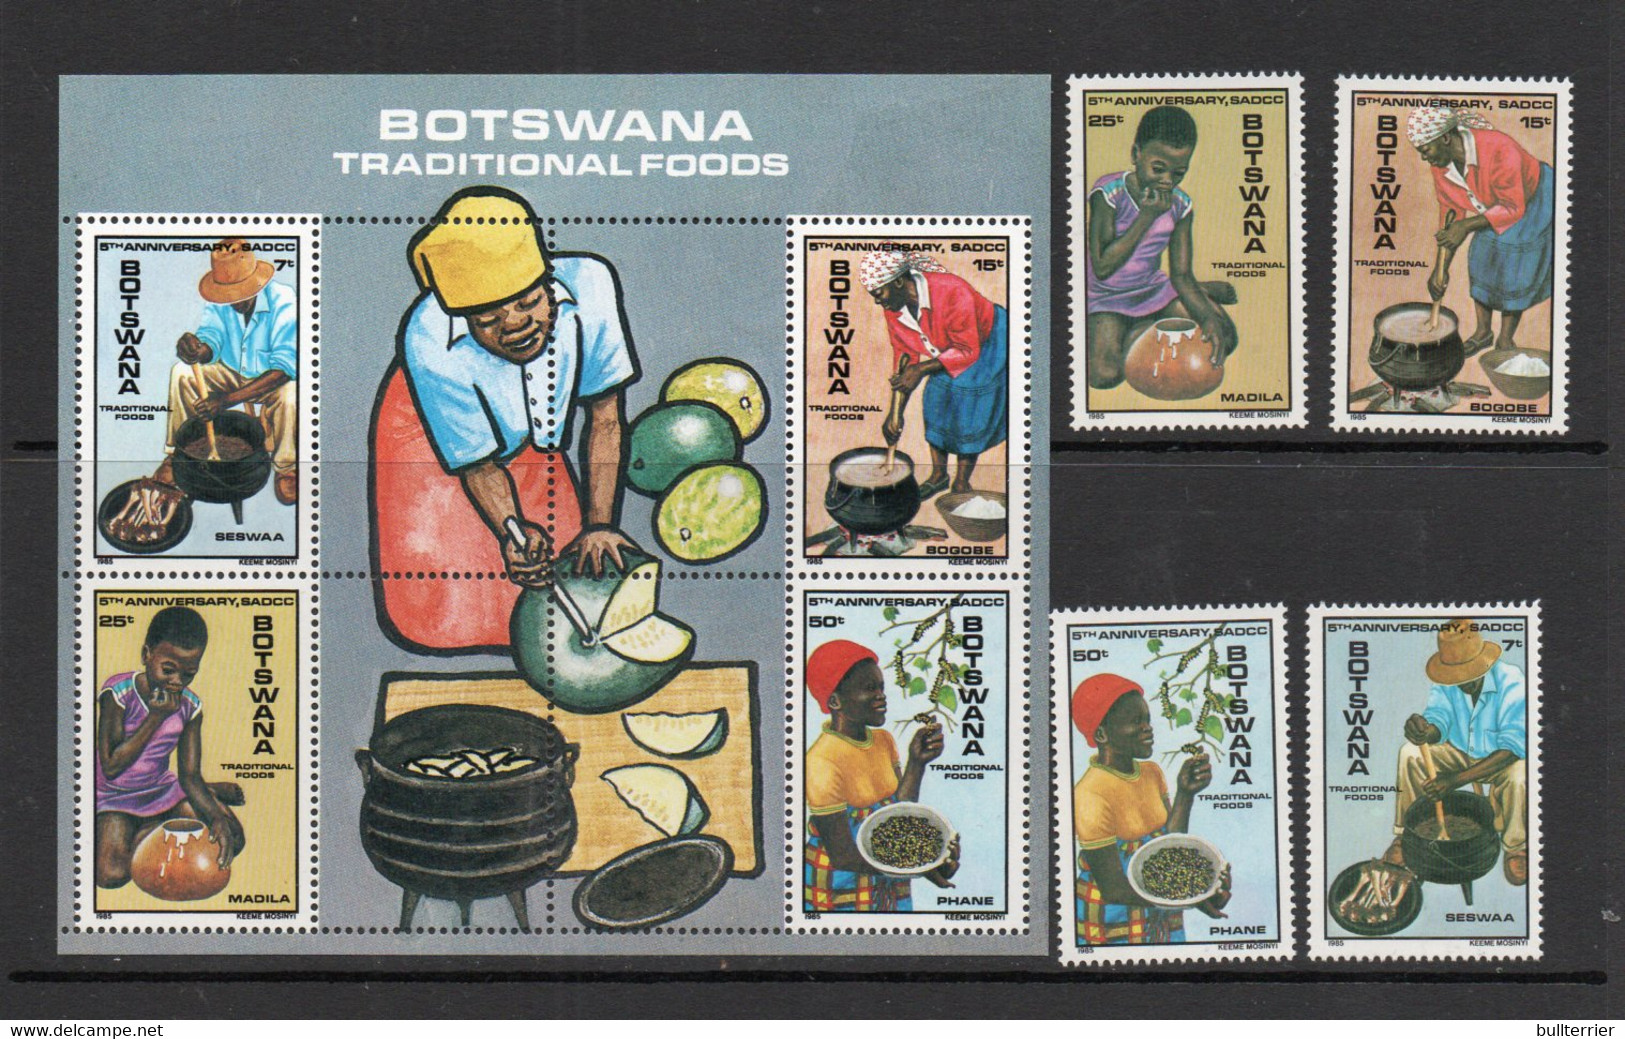 BOTSWANA -  1985 - TRADITIONAL FOODS  SET OF 4 + SOUVENIR SHEET  MINT NEVER HINGED , SG CAT £10.75 - Botswana (1966-...)